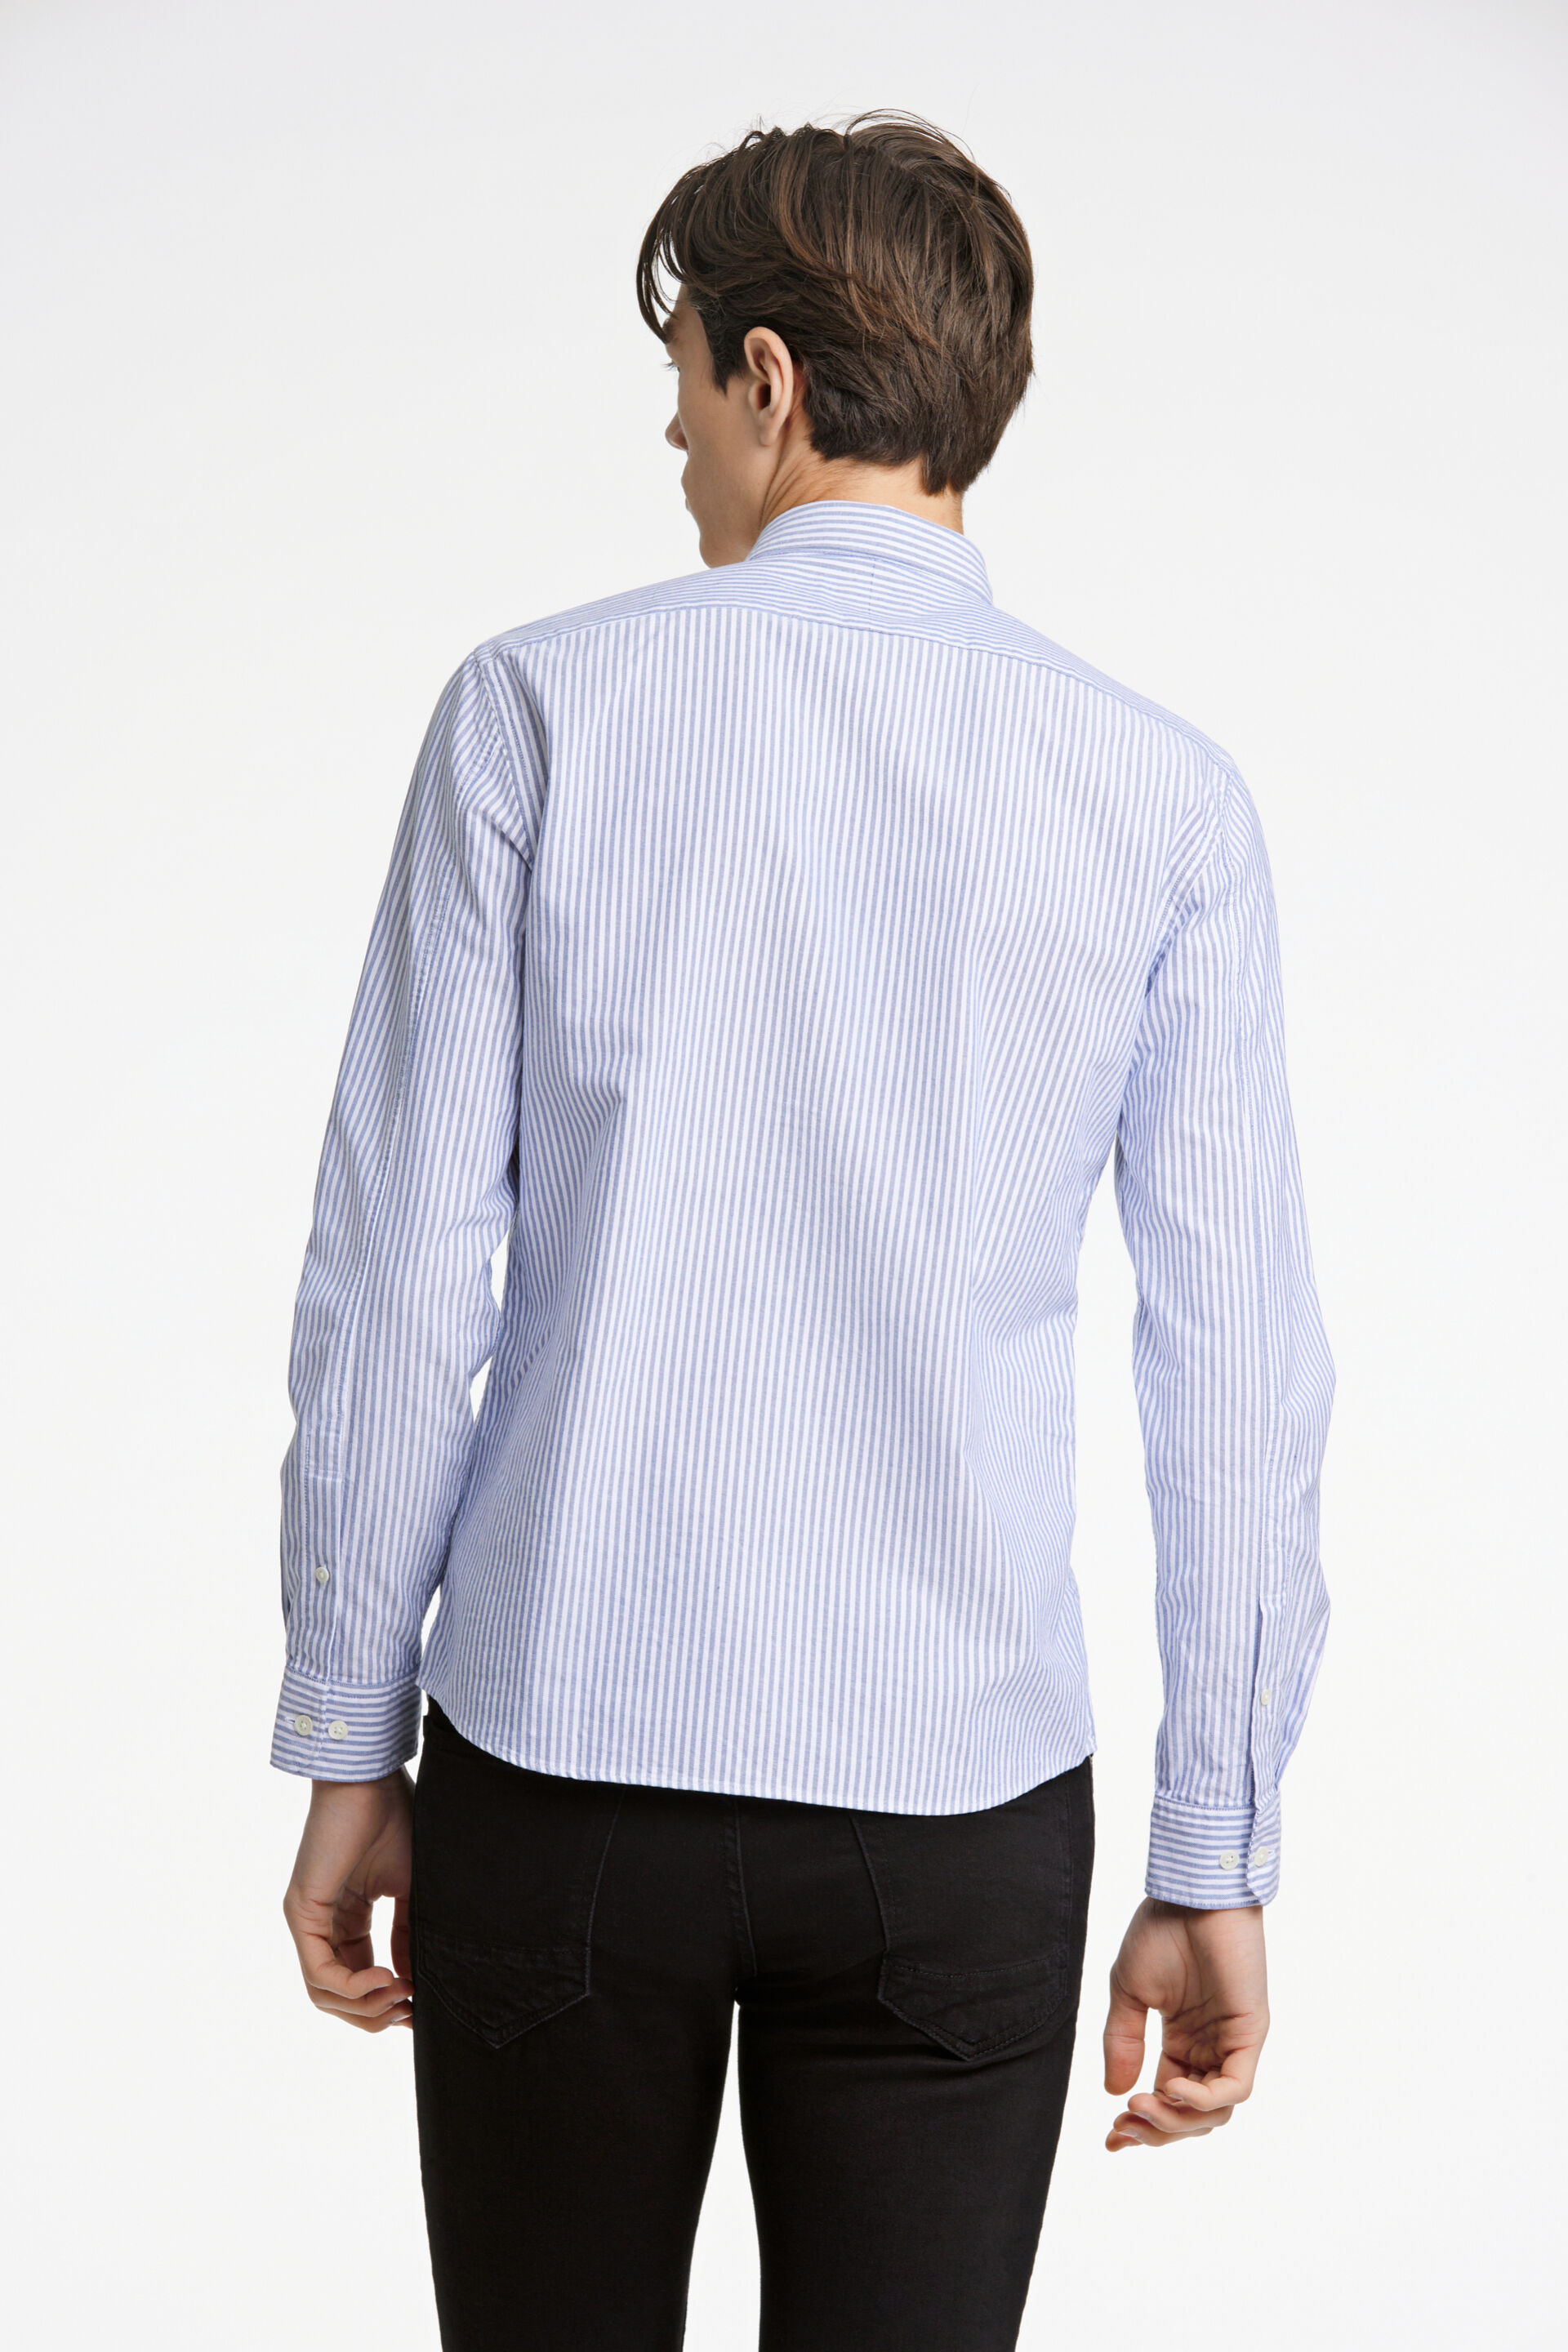 Oxford shirt 60-205020